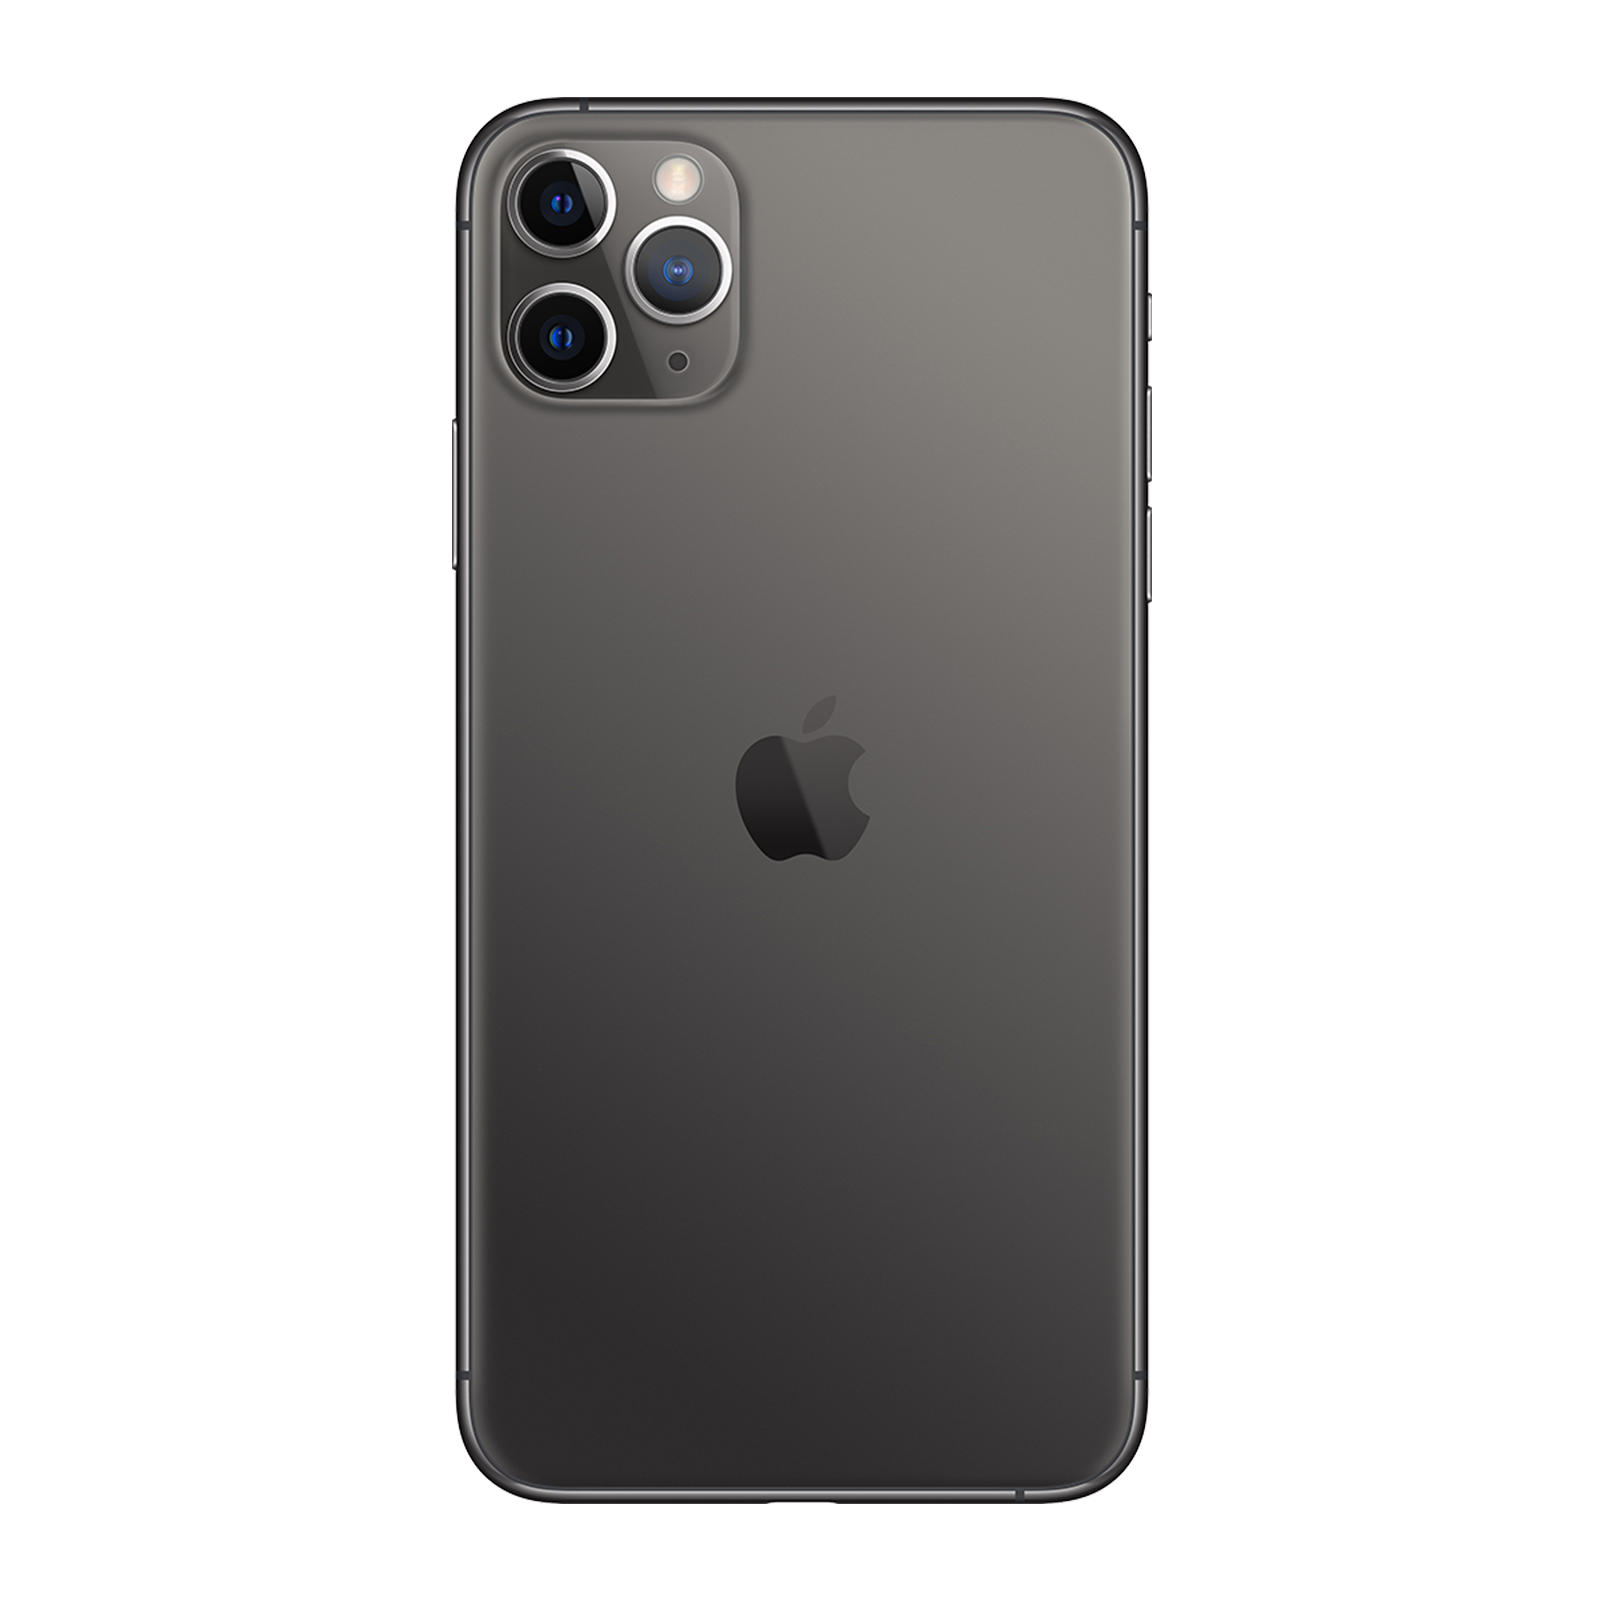 iPhone 11 Pro 512GB Space Grey Fair Unlocked - New Battery